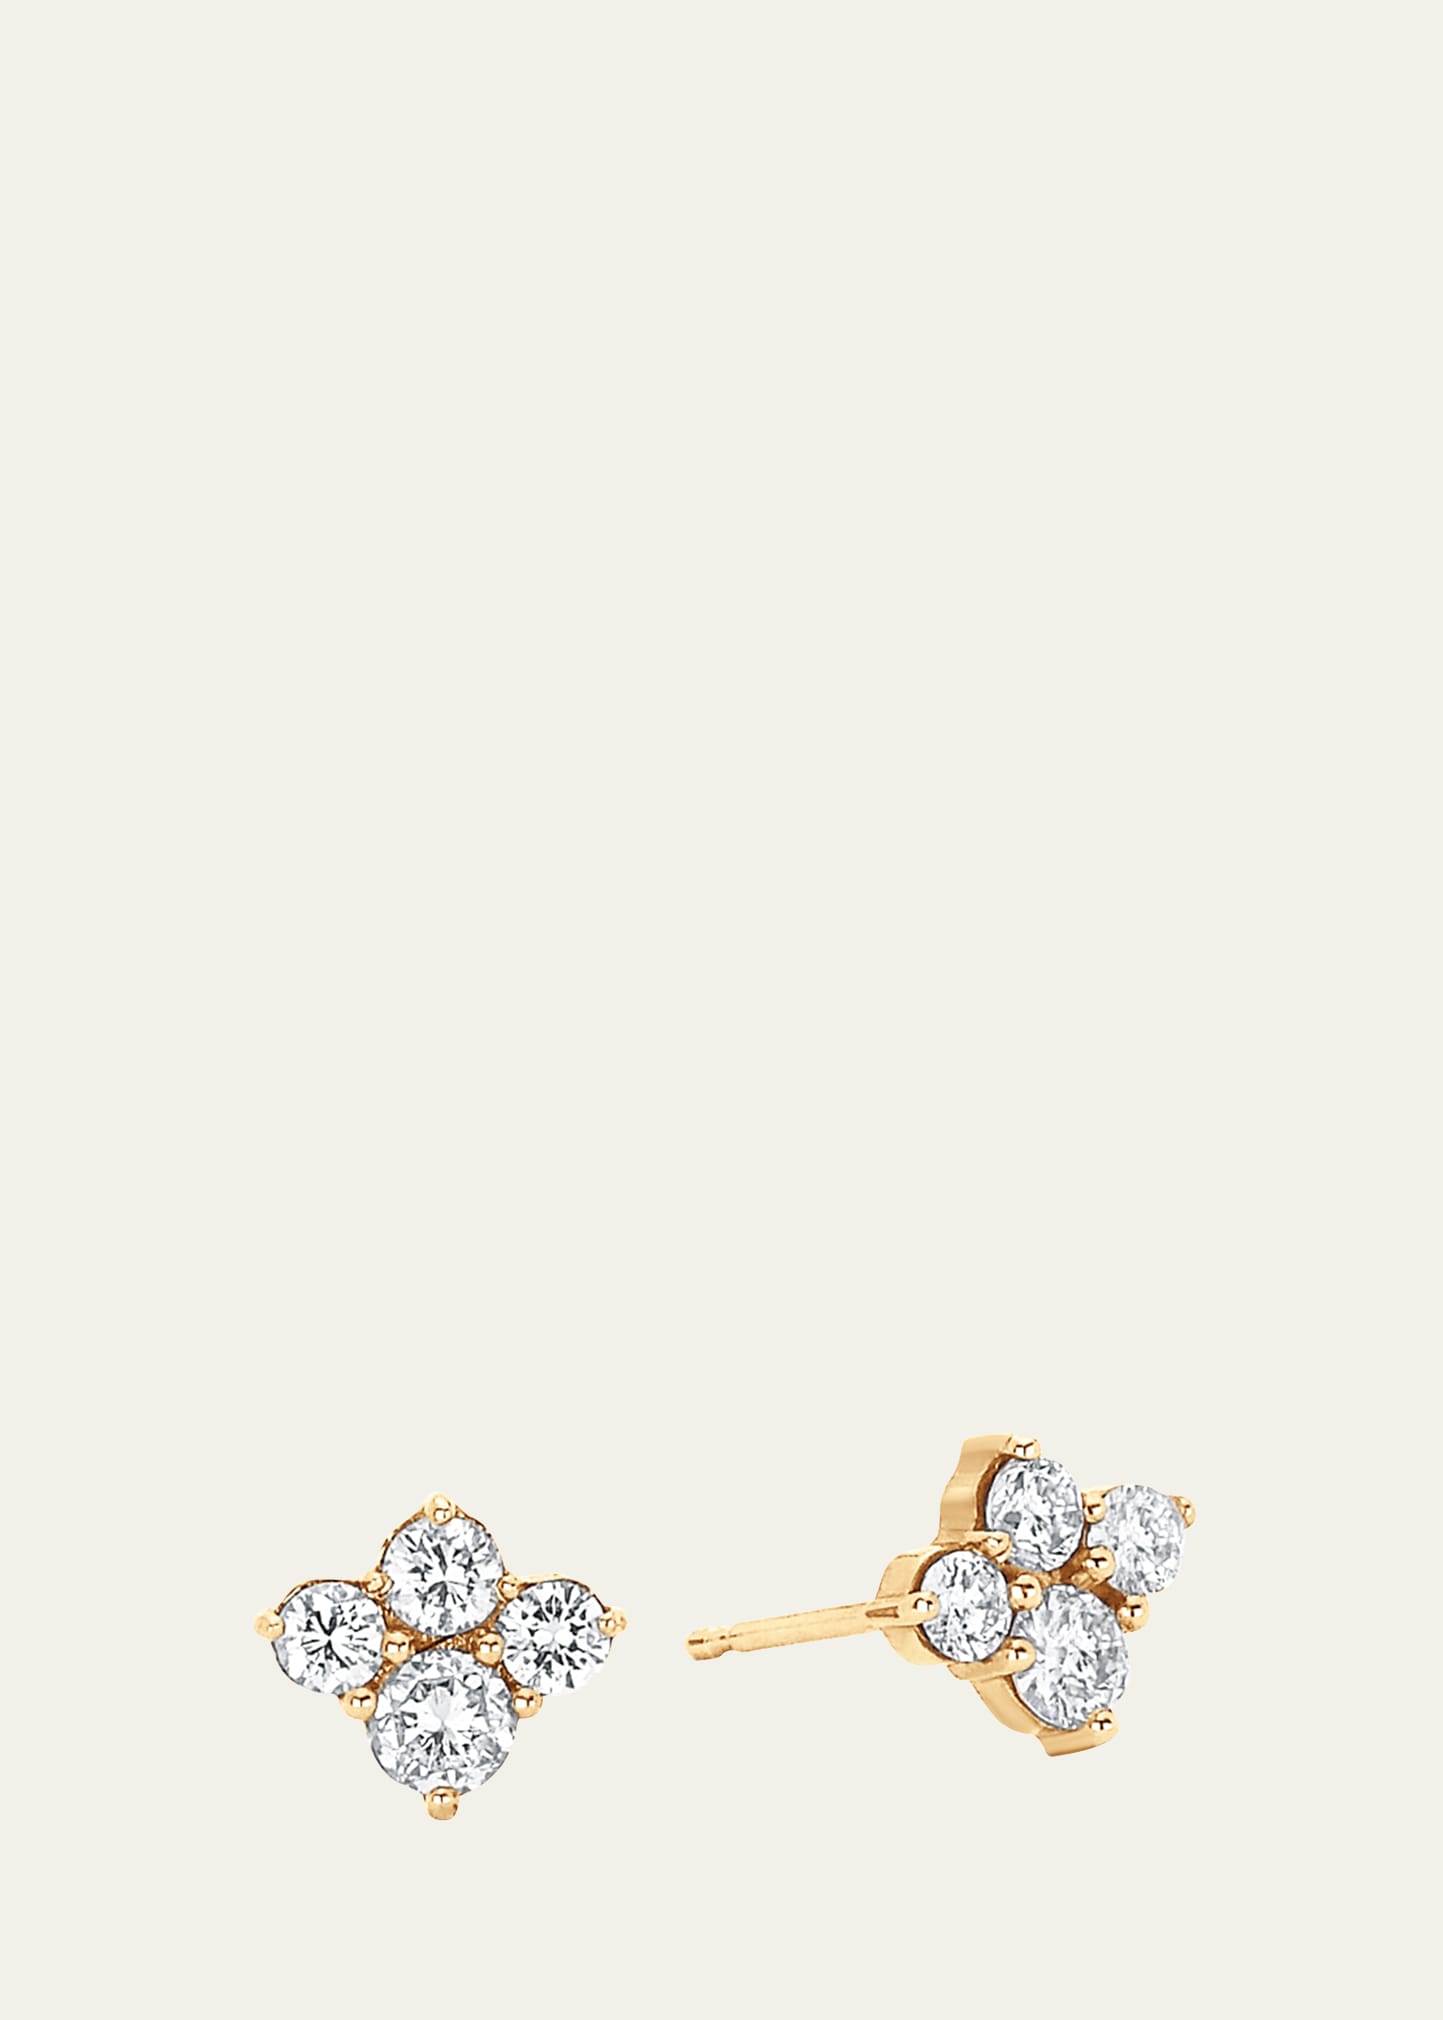 18K Yellow Gold Diamond Cluster Stud Earrings